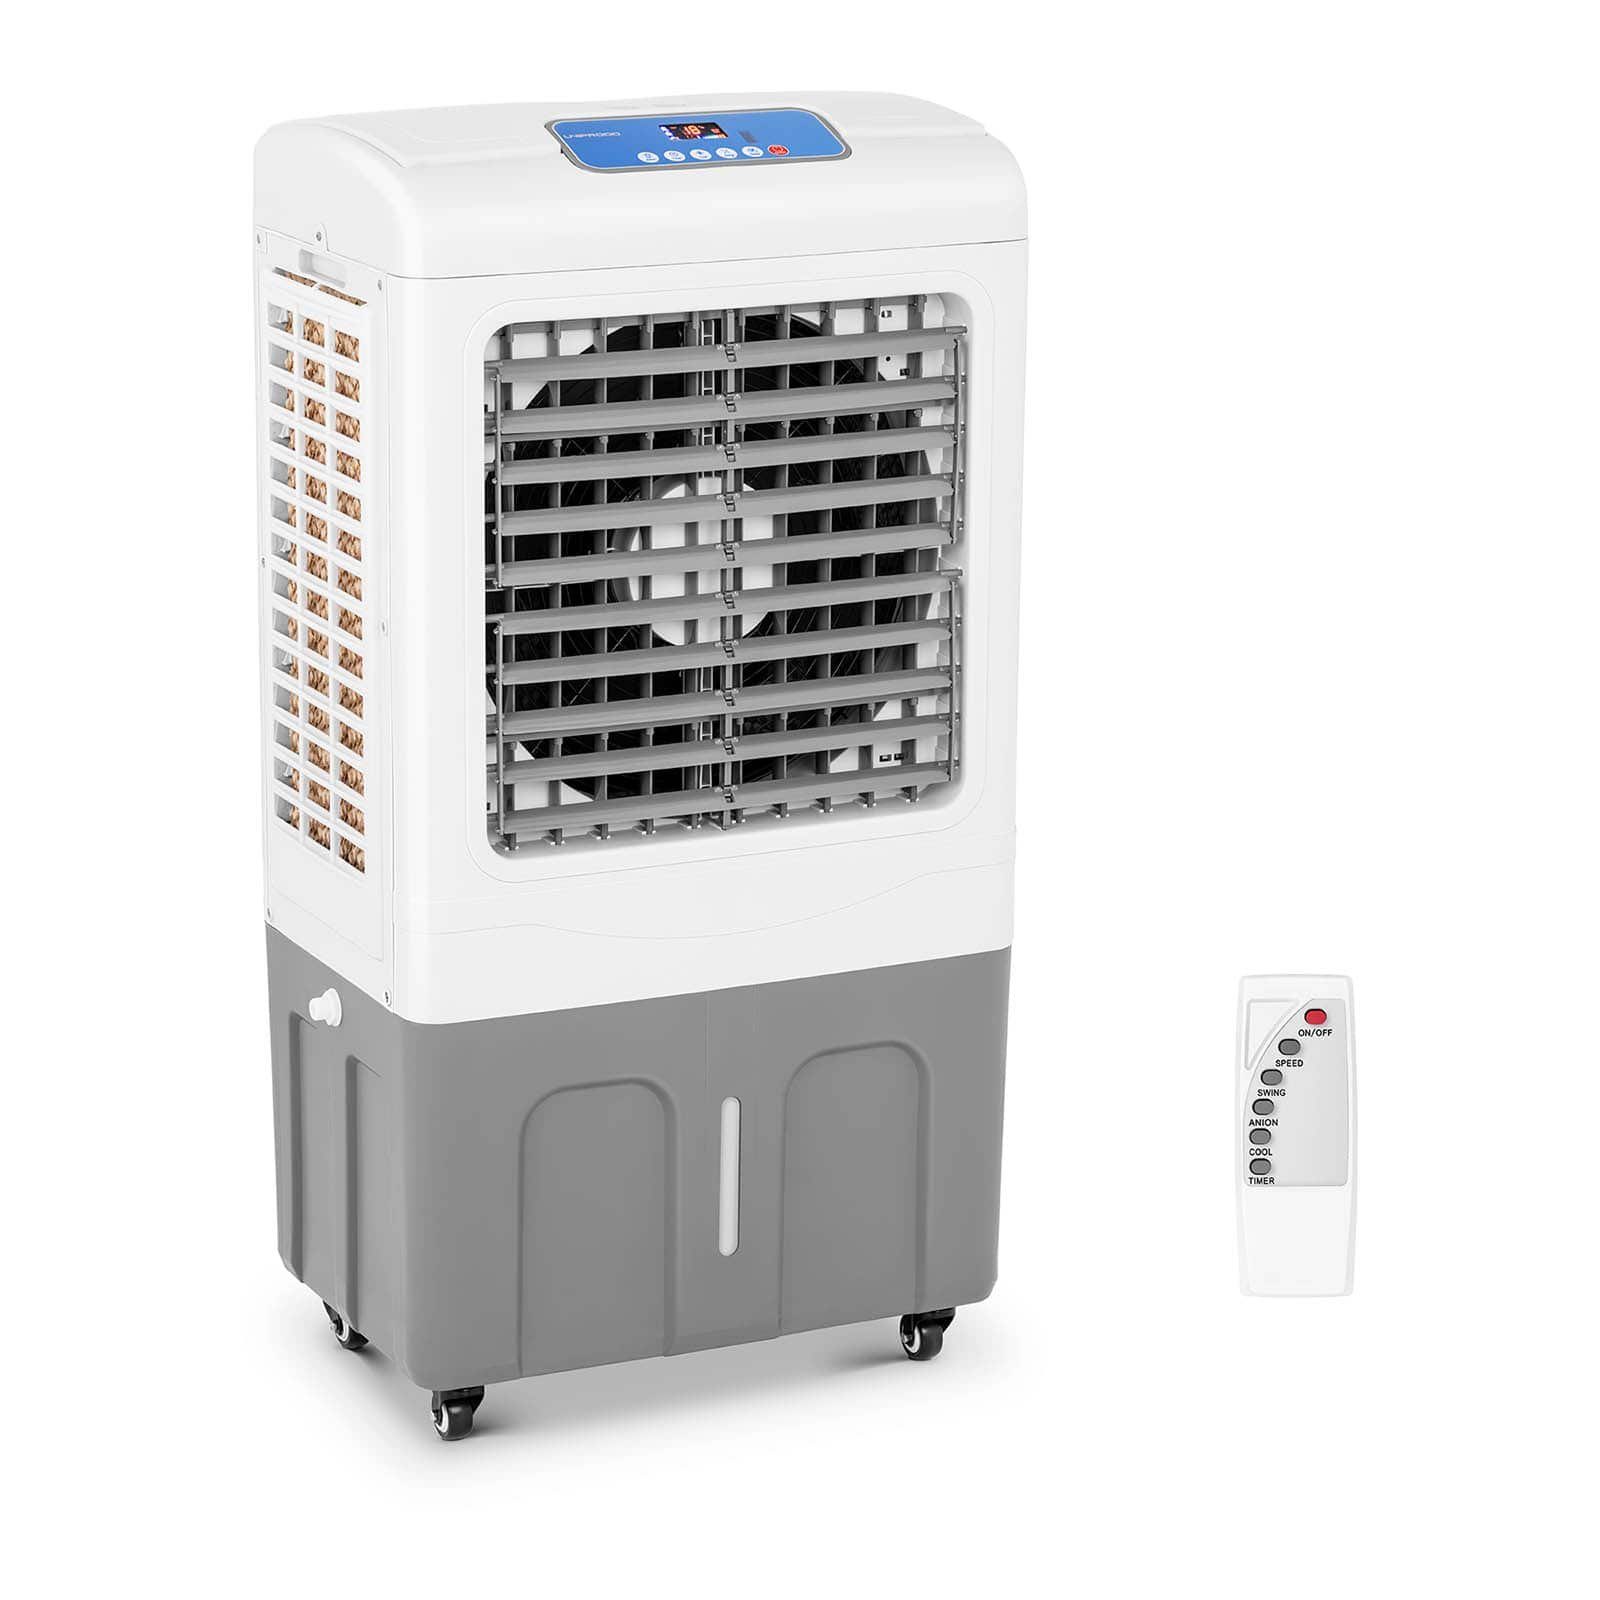 Uniprodo Ventilatorkombigerät Luftkühler mobil Luftbefeuchter Kühlgerät 3-in-1 Luftreiniger